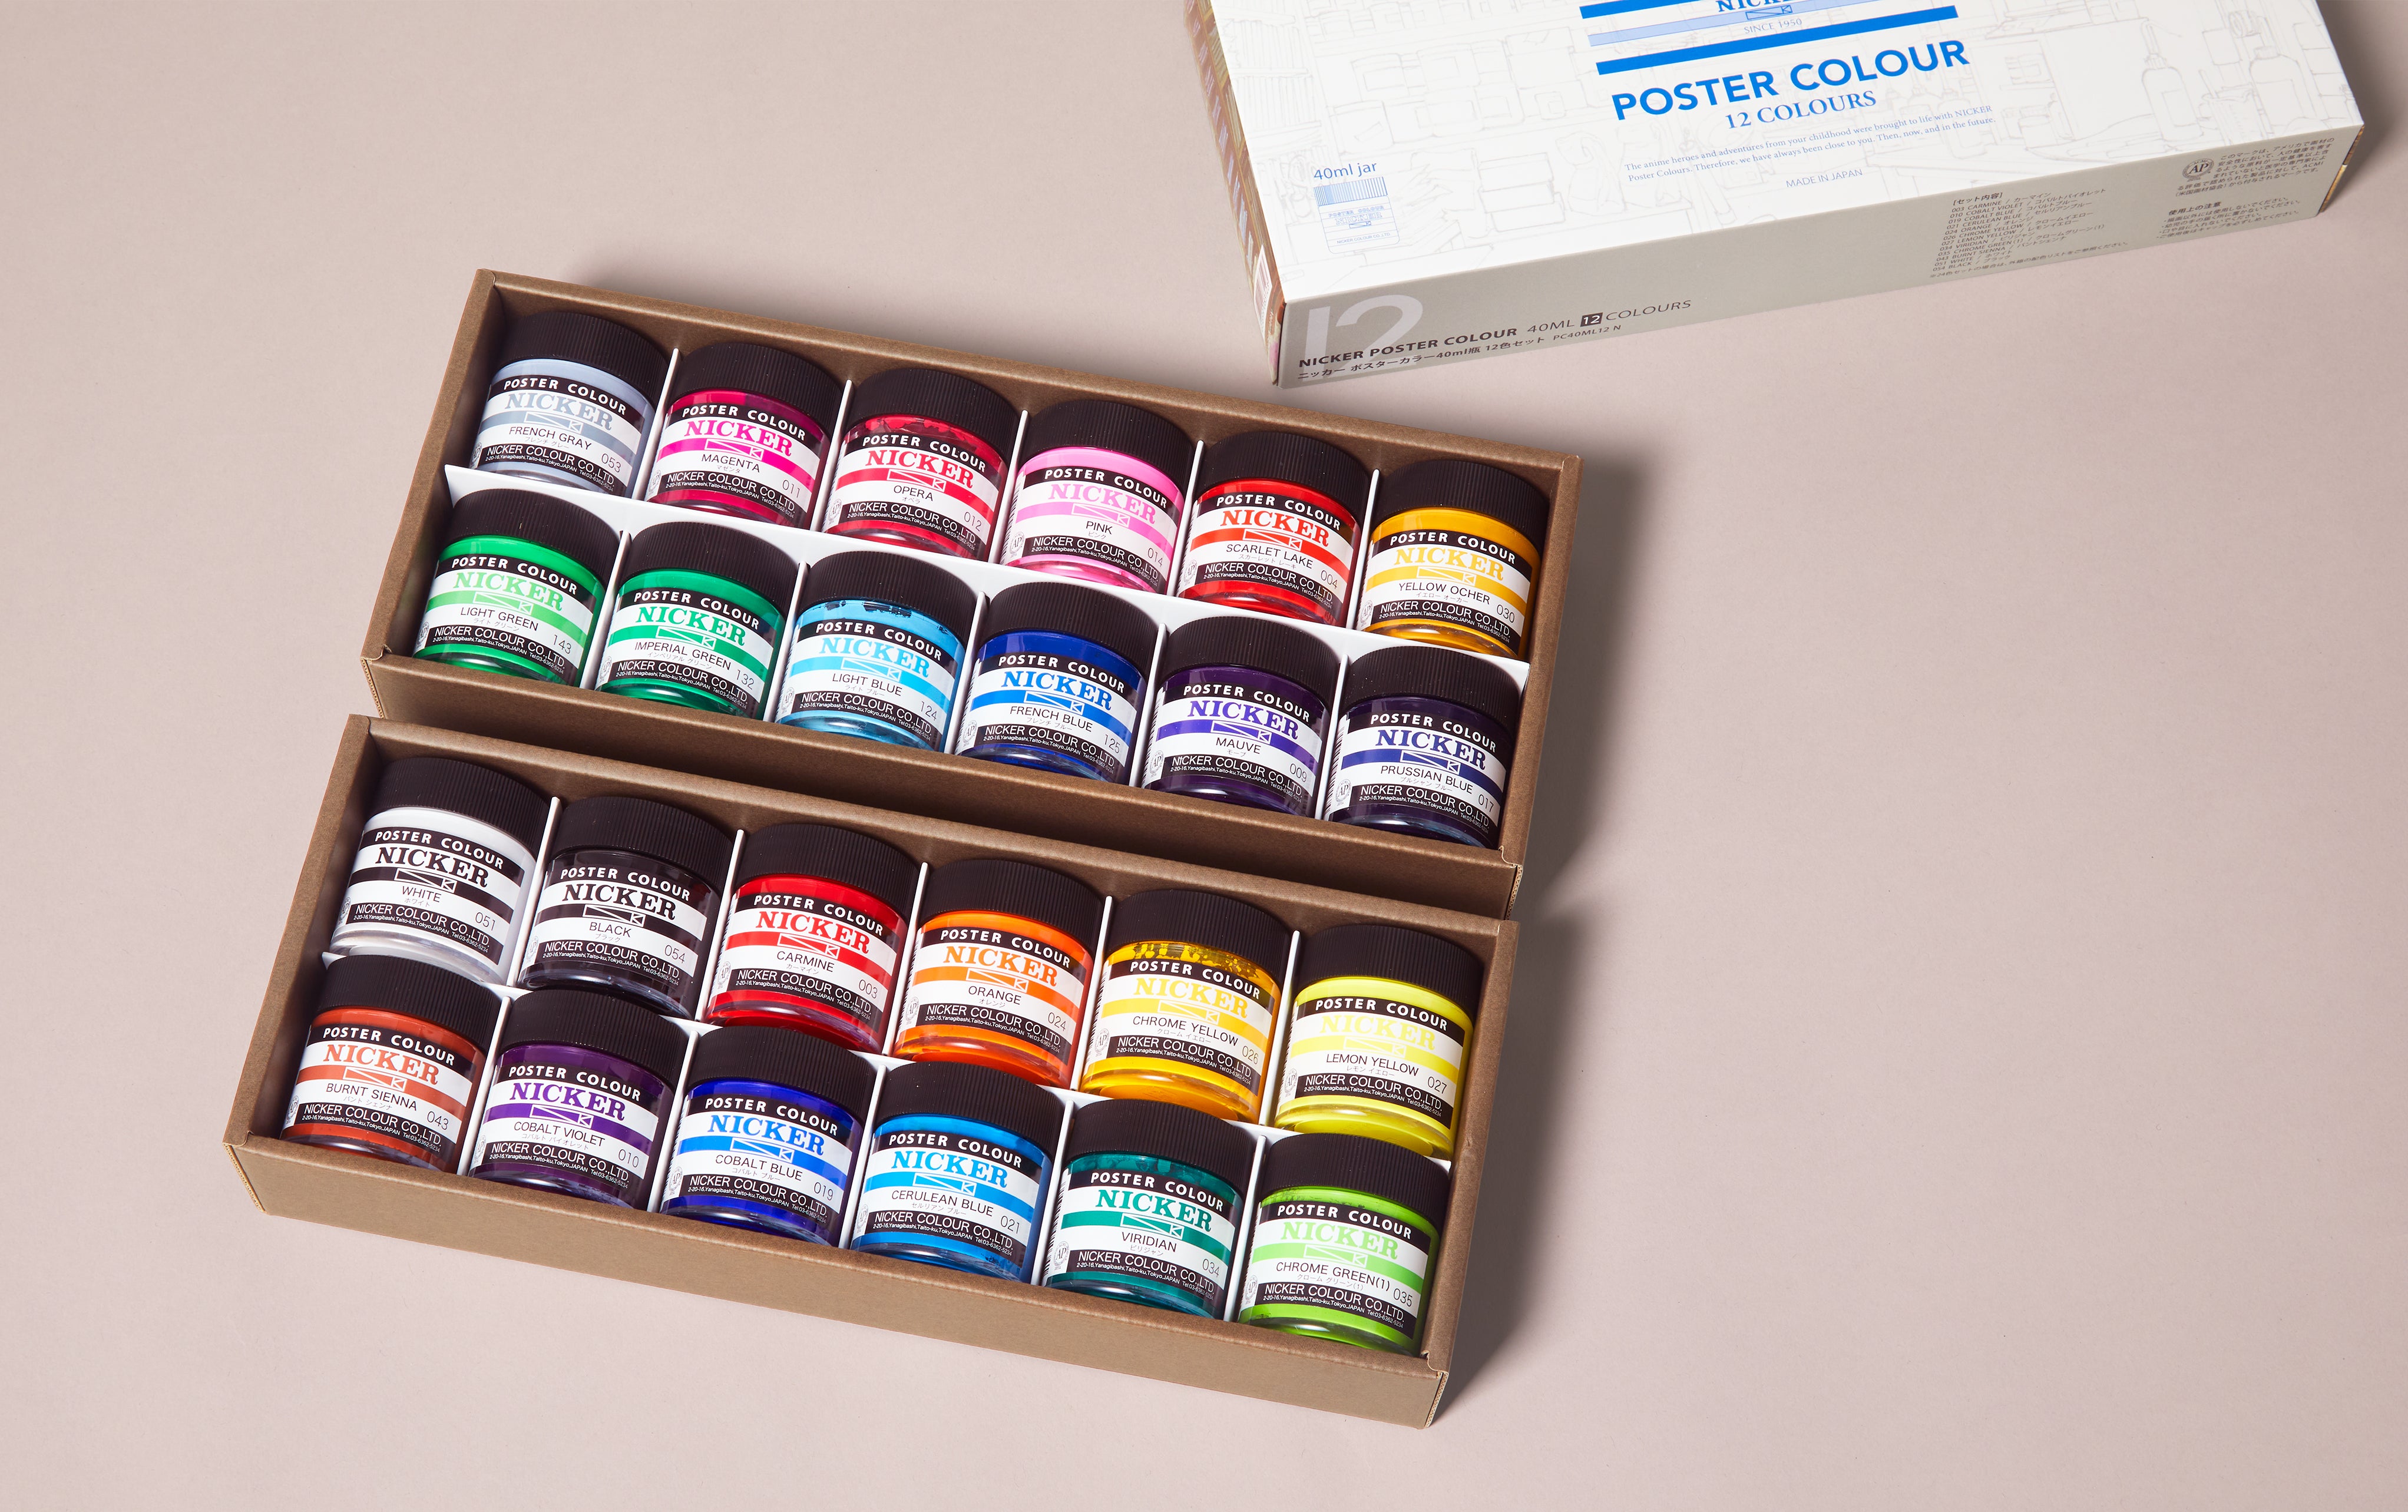 Nicker Colour 24 Colour Poster Paint Set – Choosing Keeping